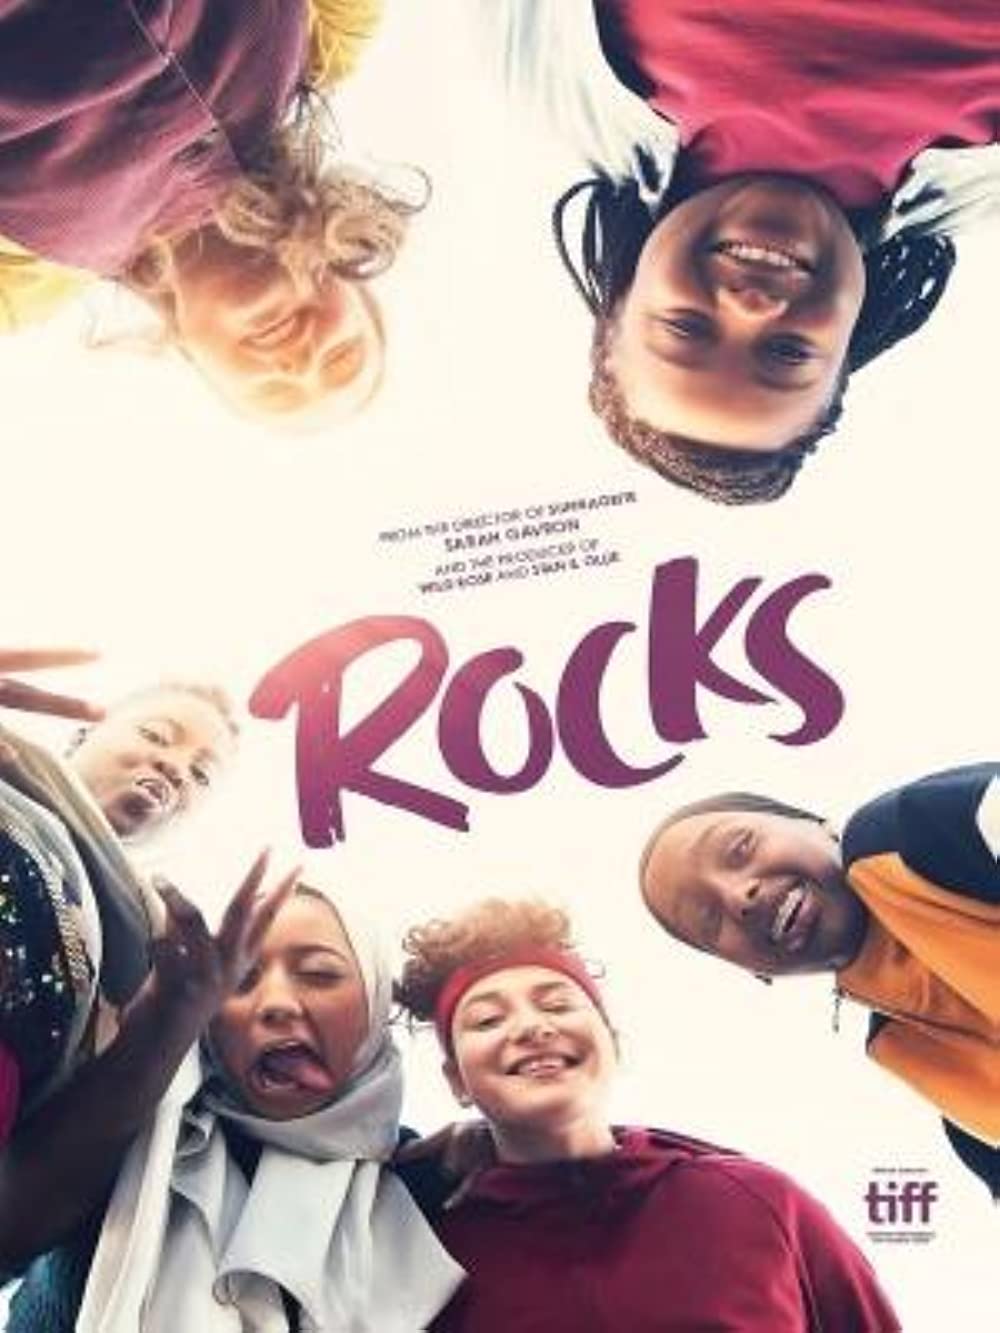 Rocks on Netflix movie poster